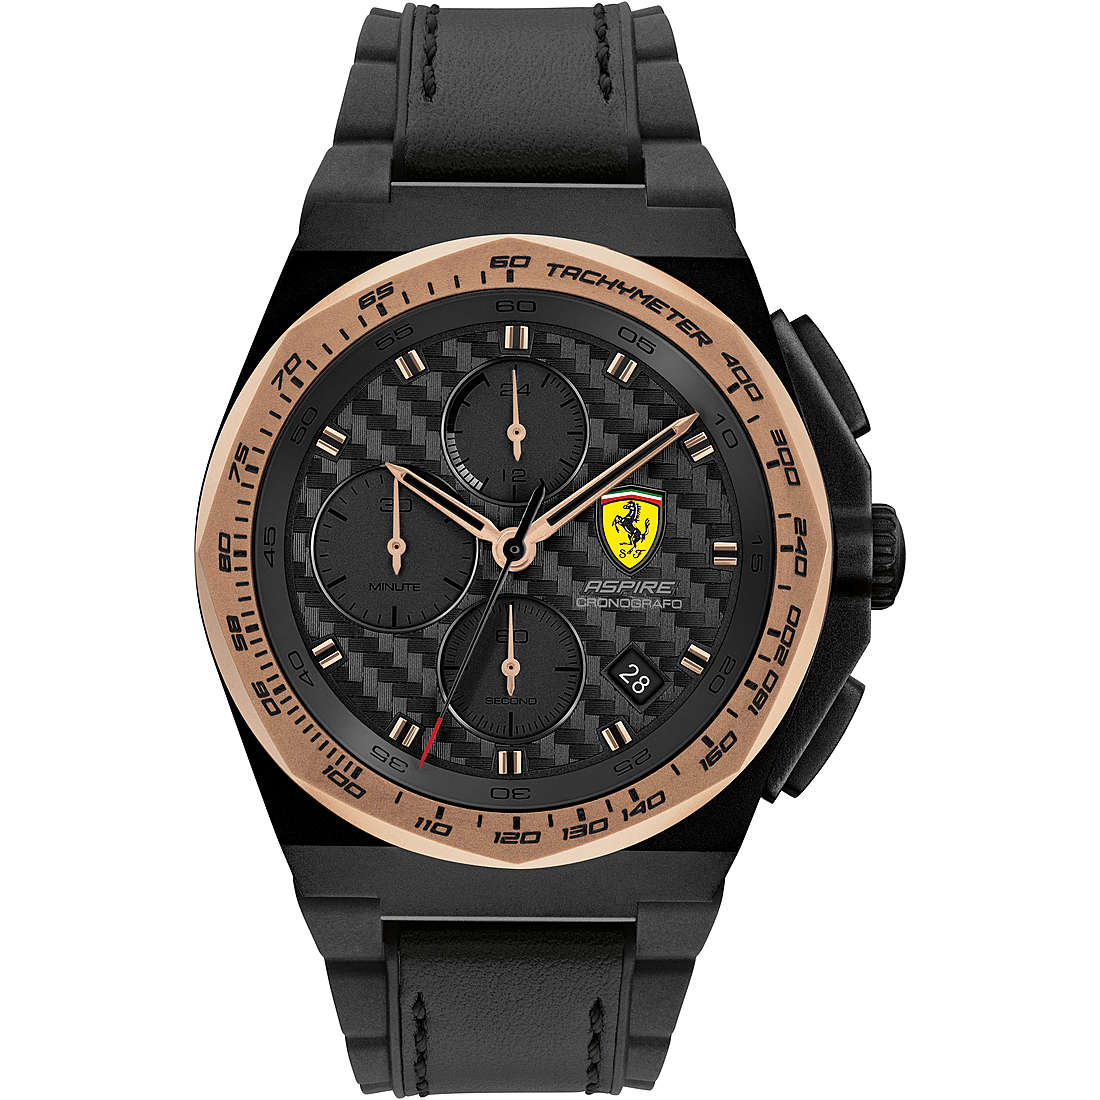 montre chronographe homme Scuderia Ferrari FER0830867